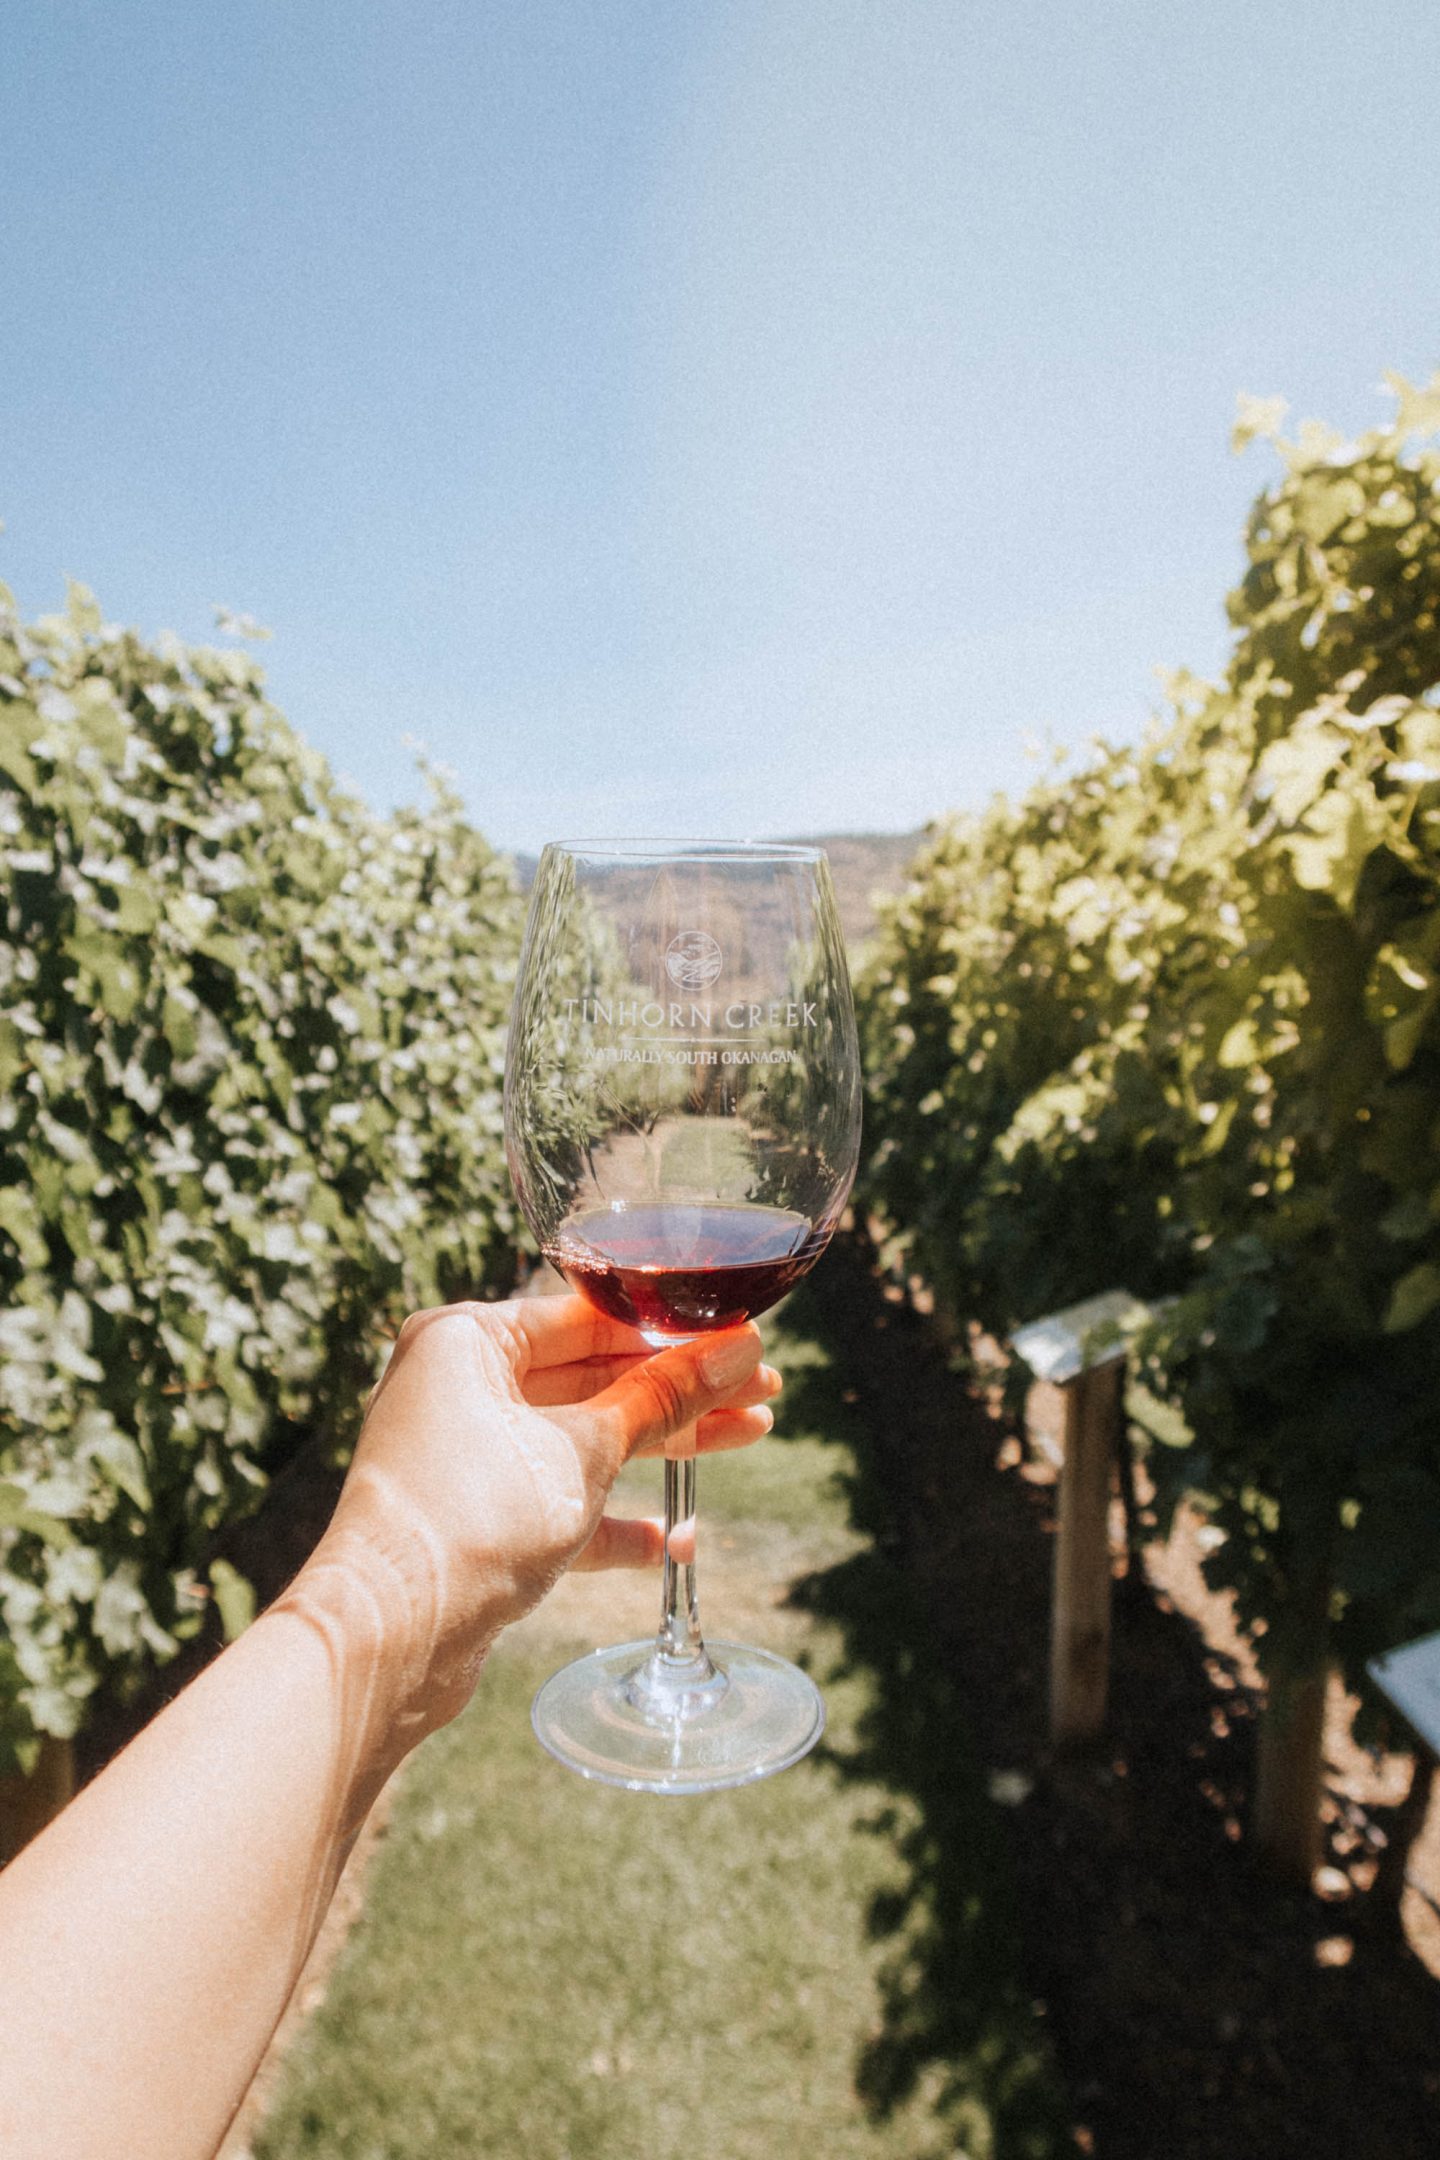 Posing with my wine glass between the vines at Tinhorn Creek Wineries in Osoyoos BC Okanagan